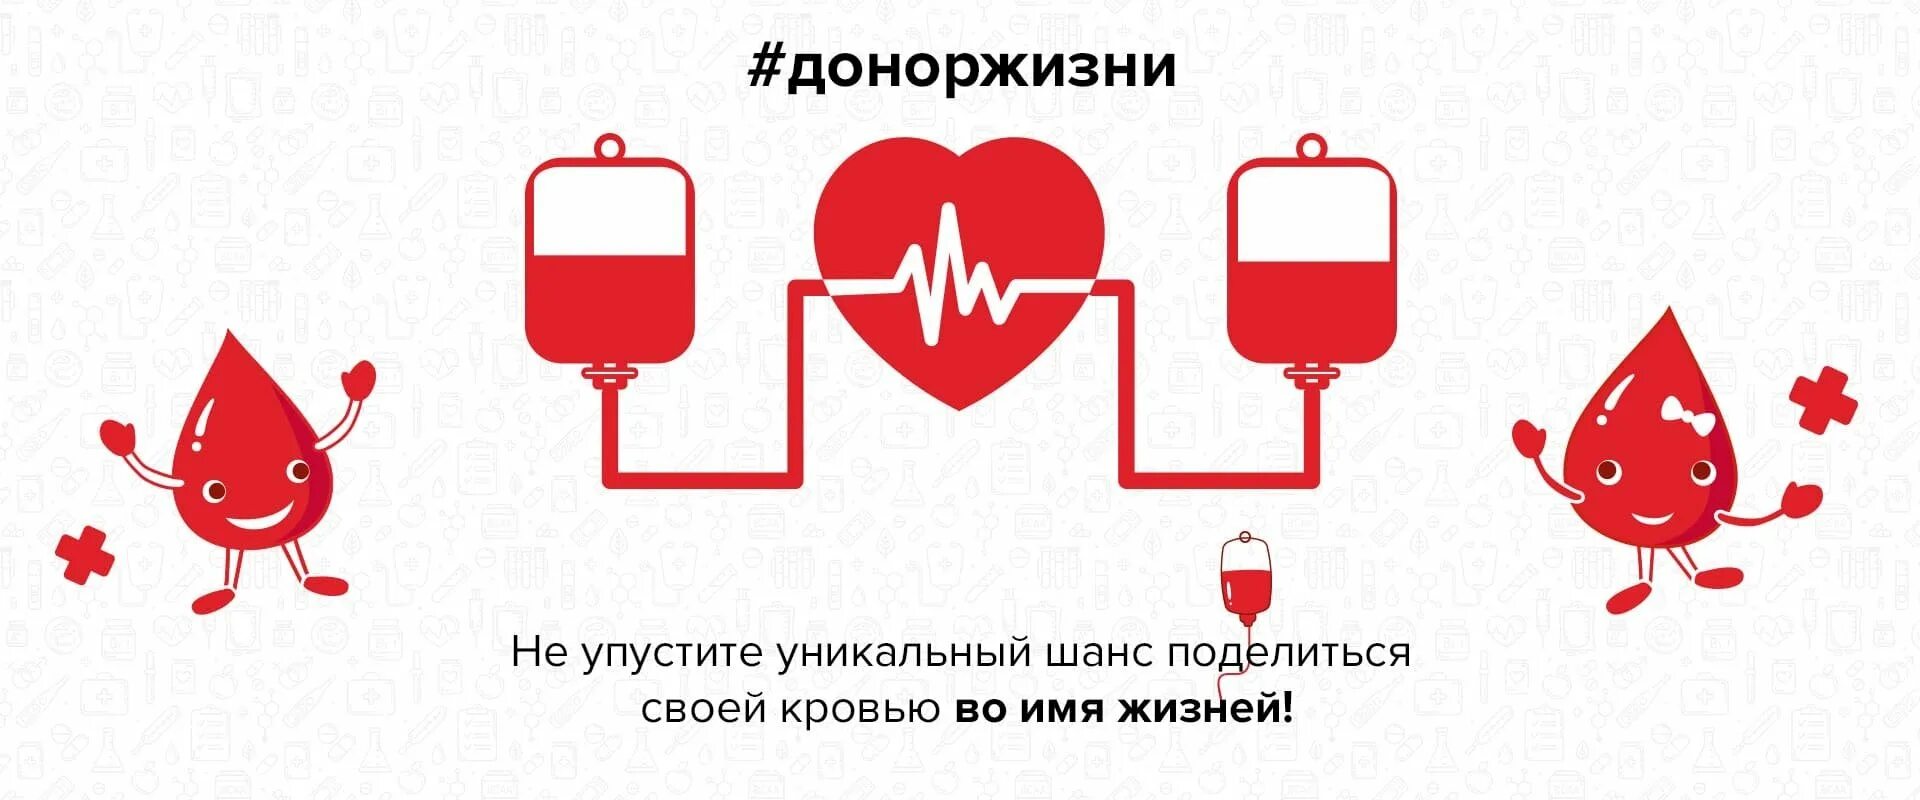 Донор крови донор жизни. Донорство картинки. Донорство крови плакат. Донорство рисунок. Донорство крови рисунок.